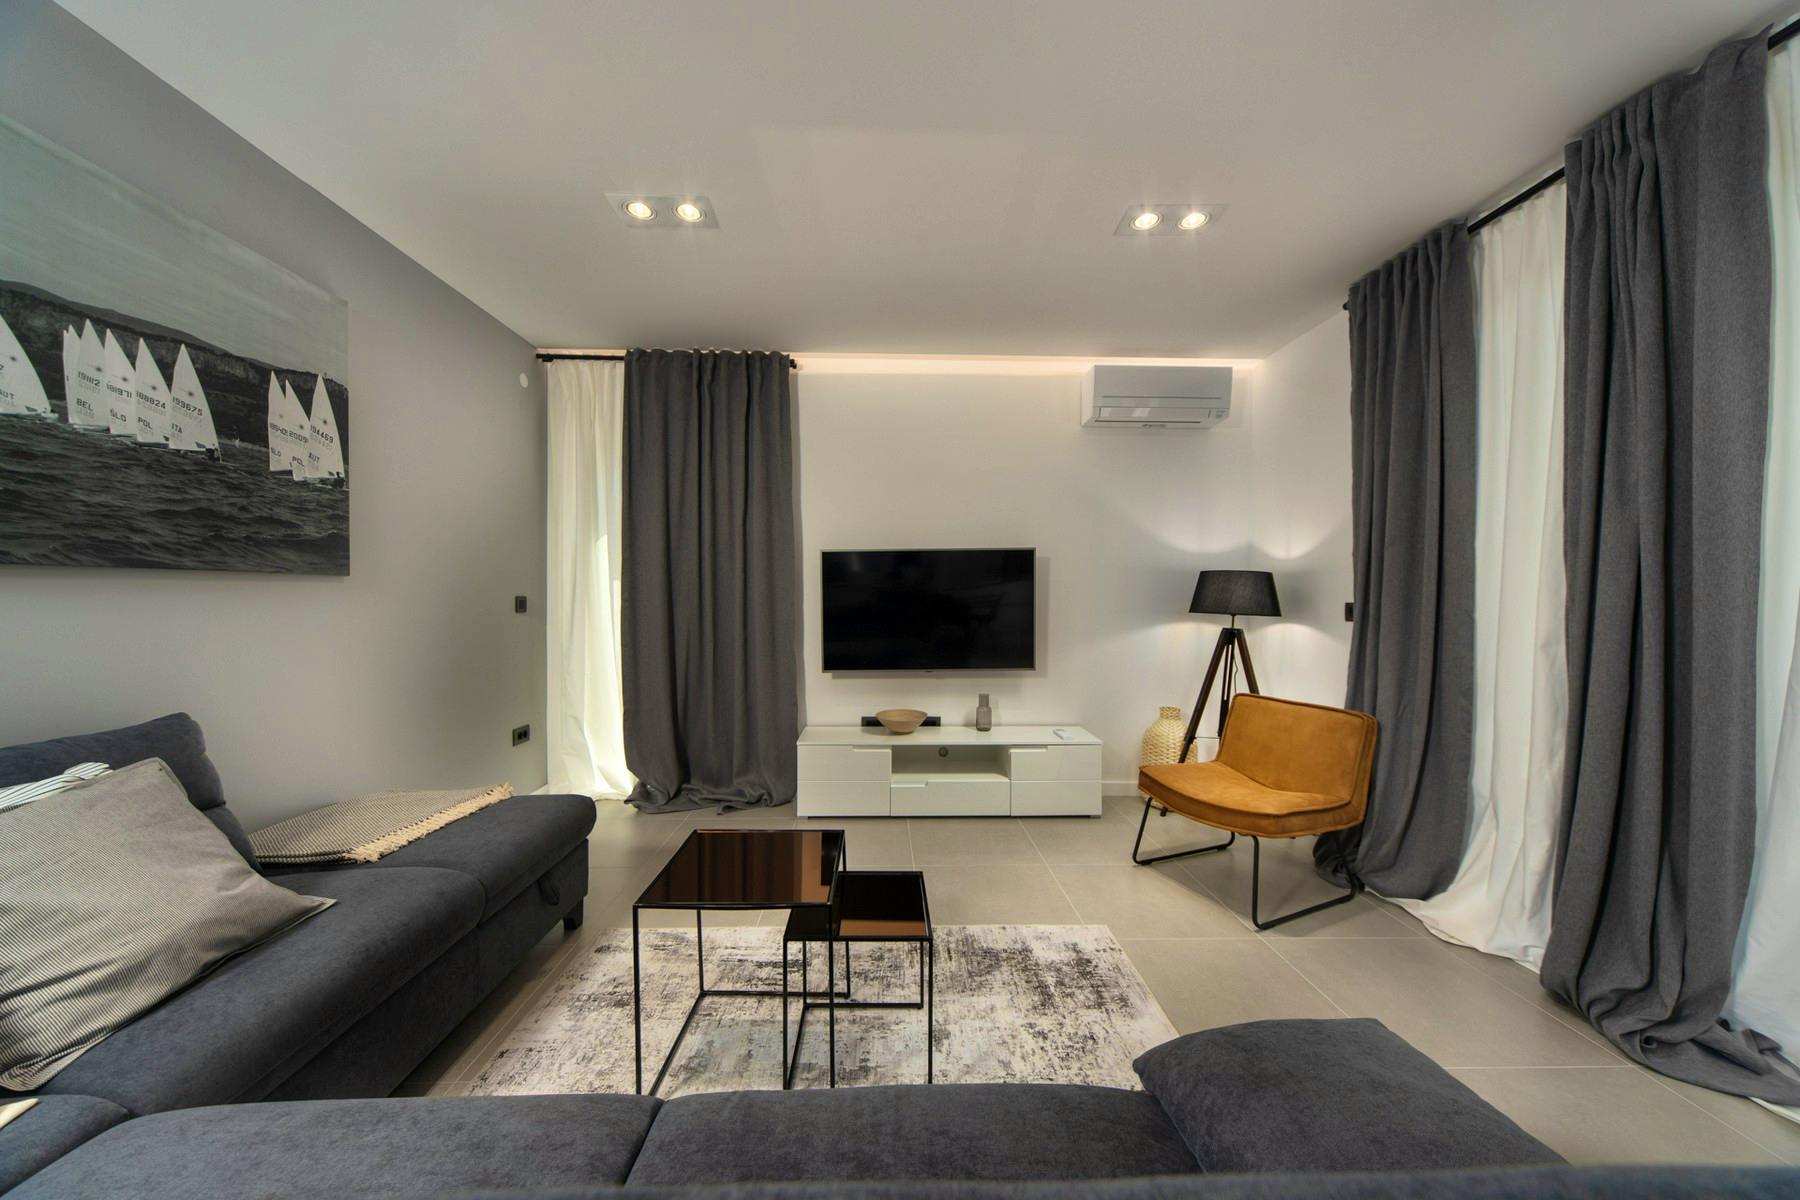 Elegant living room with modern amenities